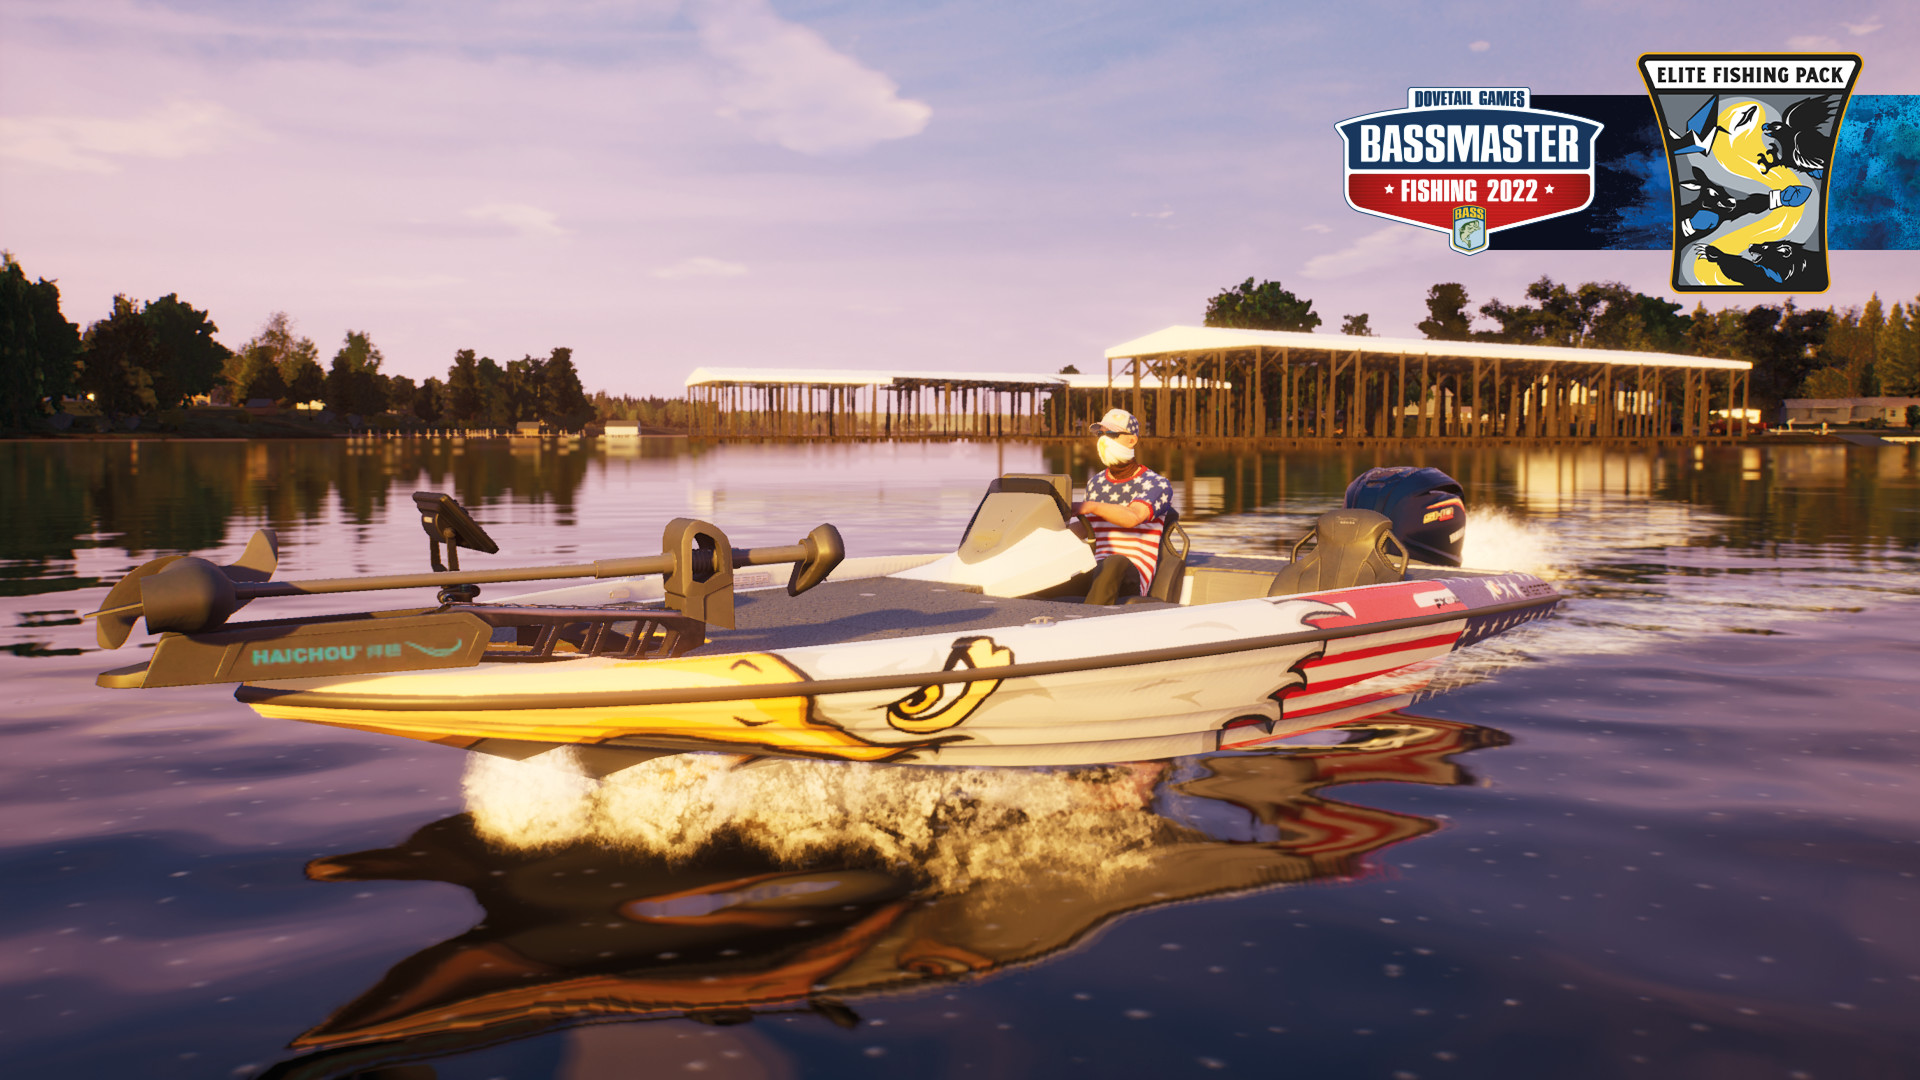 Bassmaster Fishing 2022 - Elite Fishing Equipment Pack DLC Steam CD Key